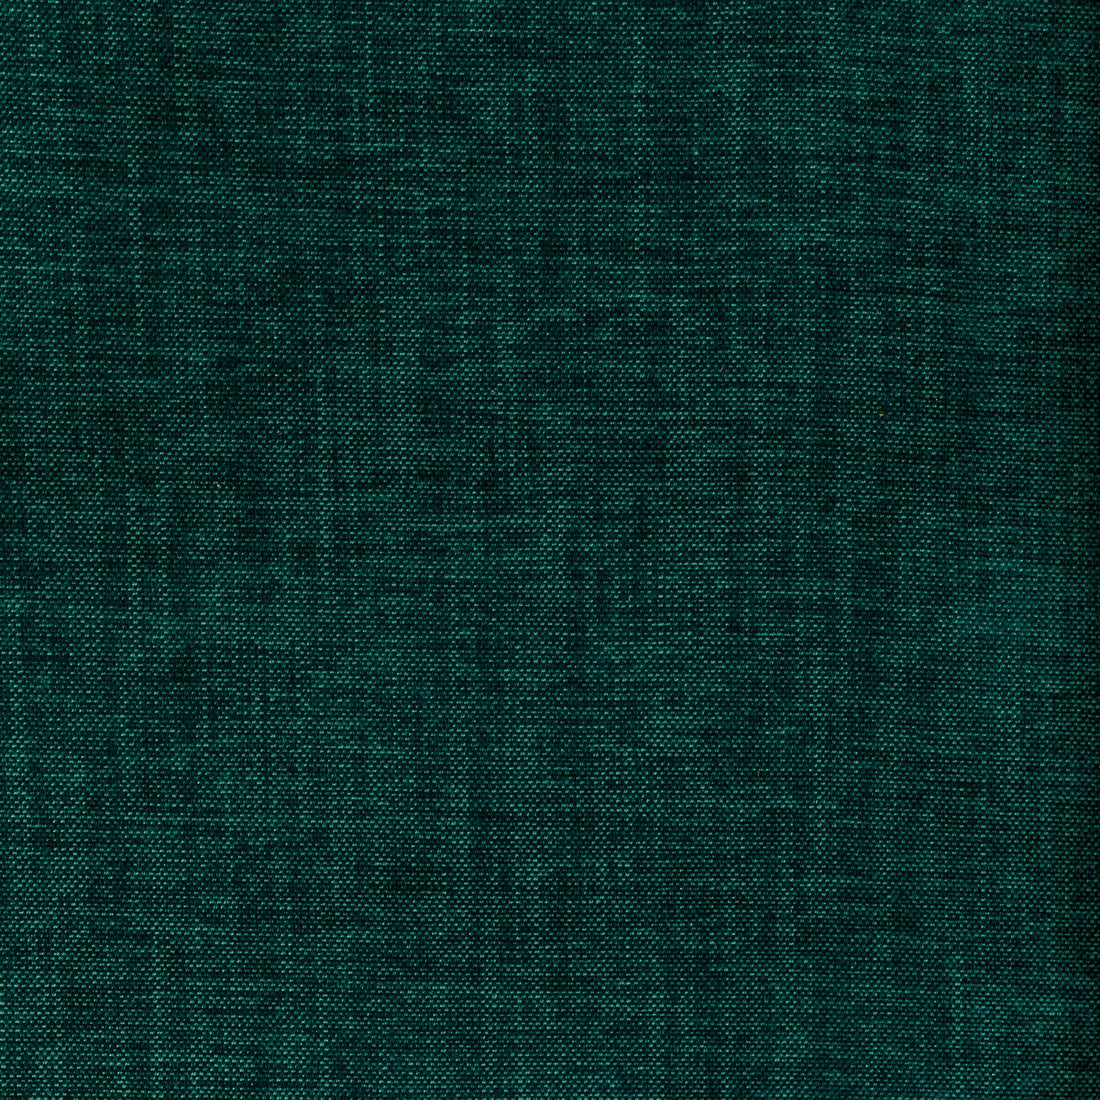 Kravet Smart fabric in 36650-35 color - pattern 36650.35.0 - by Kravet Smart in the Performance Kravetarmor collection